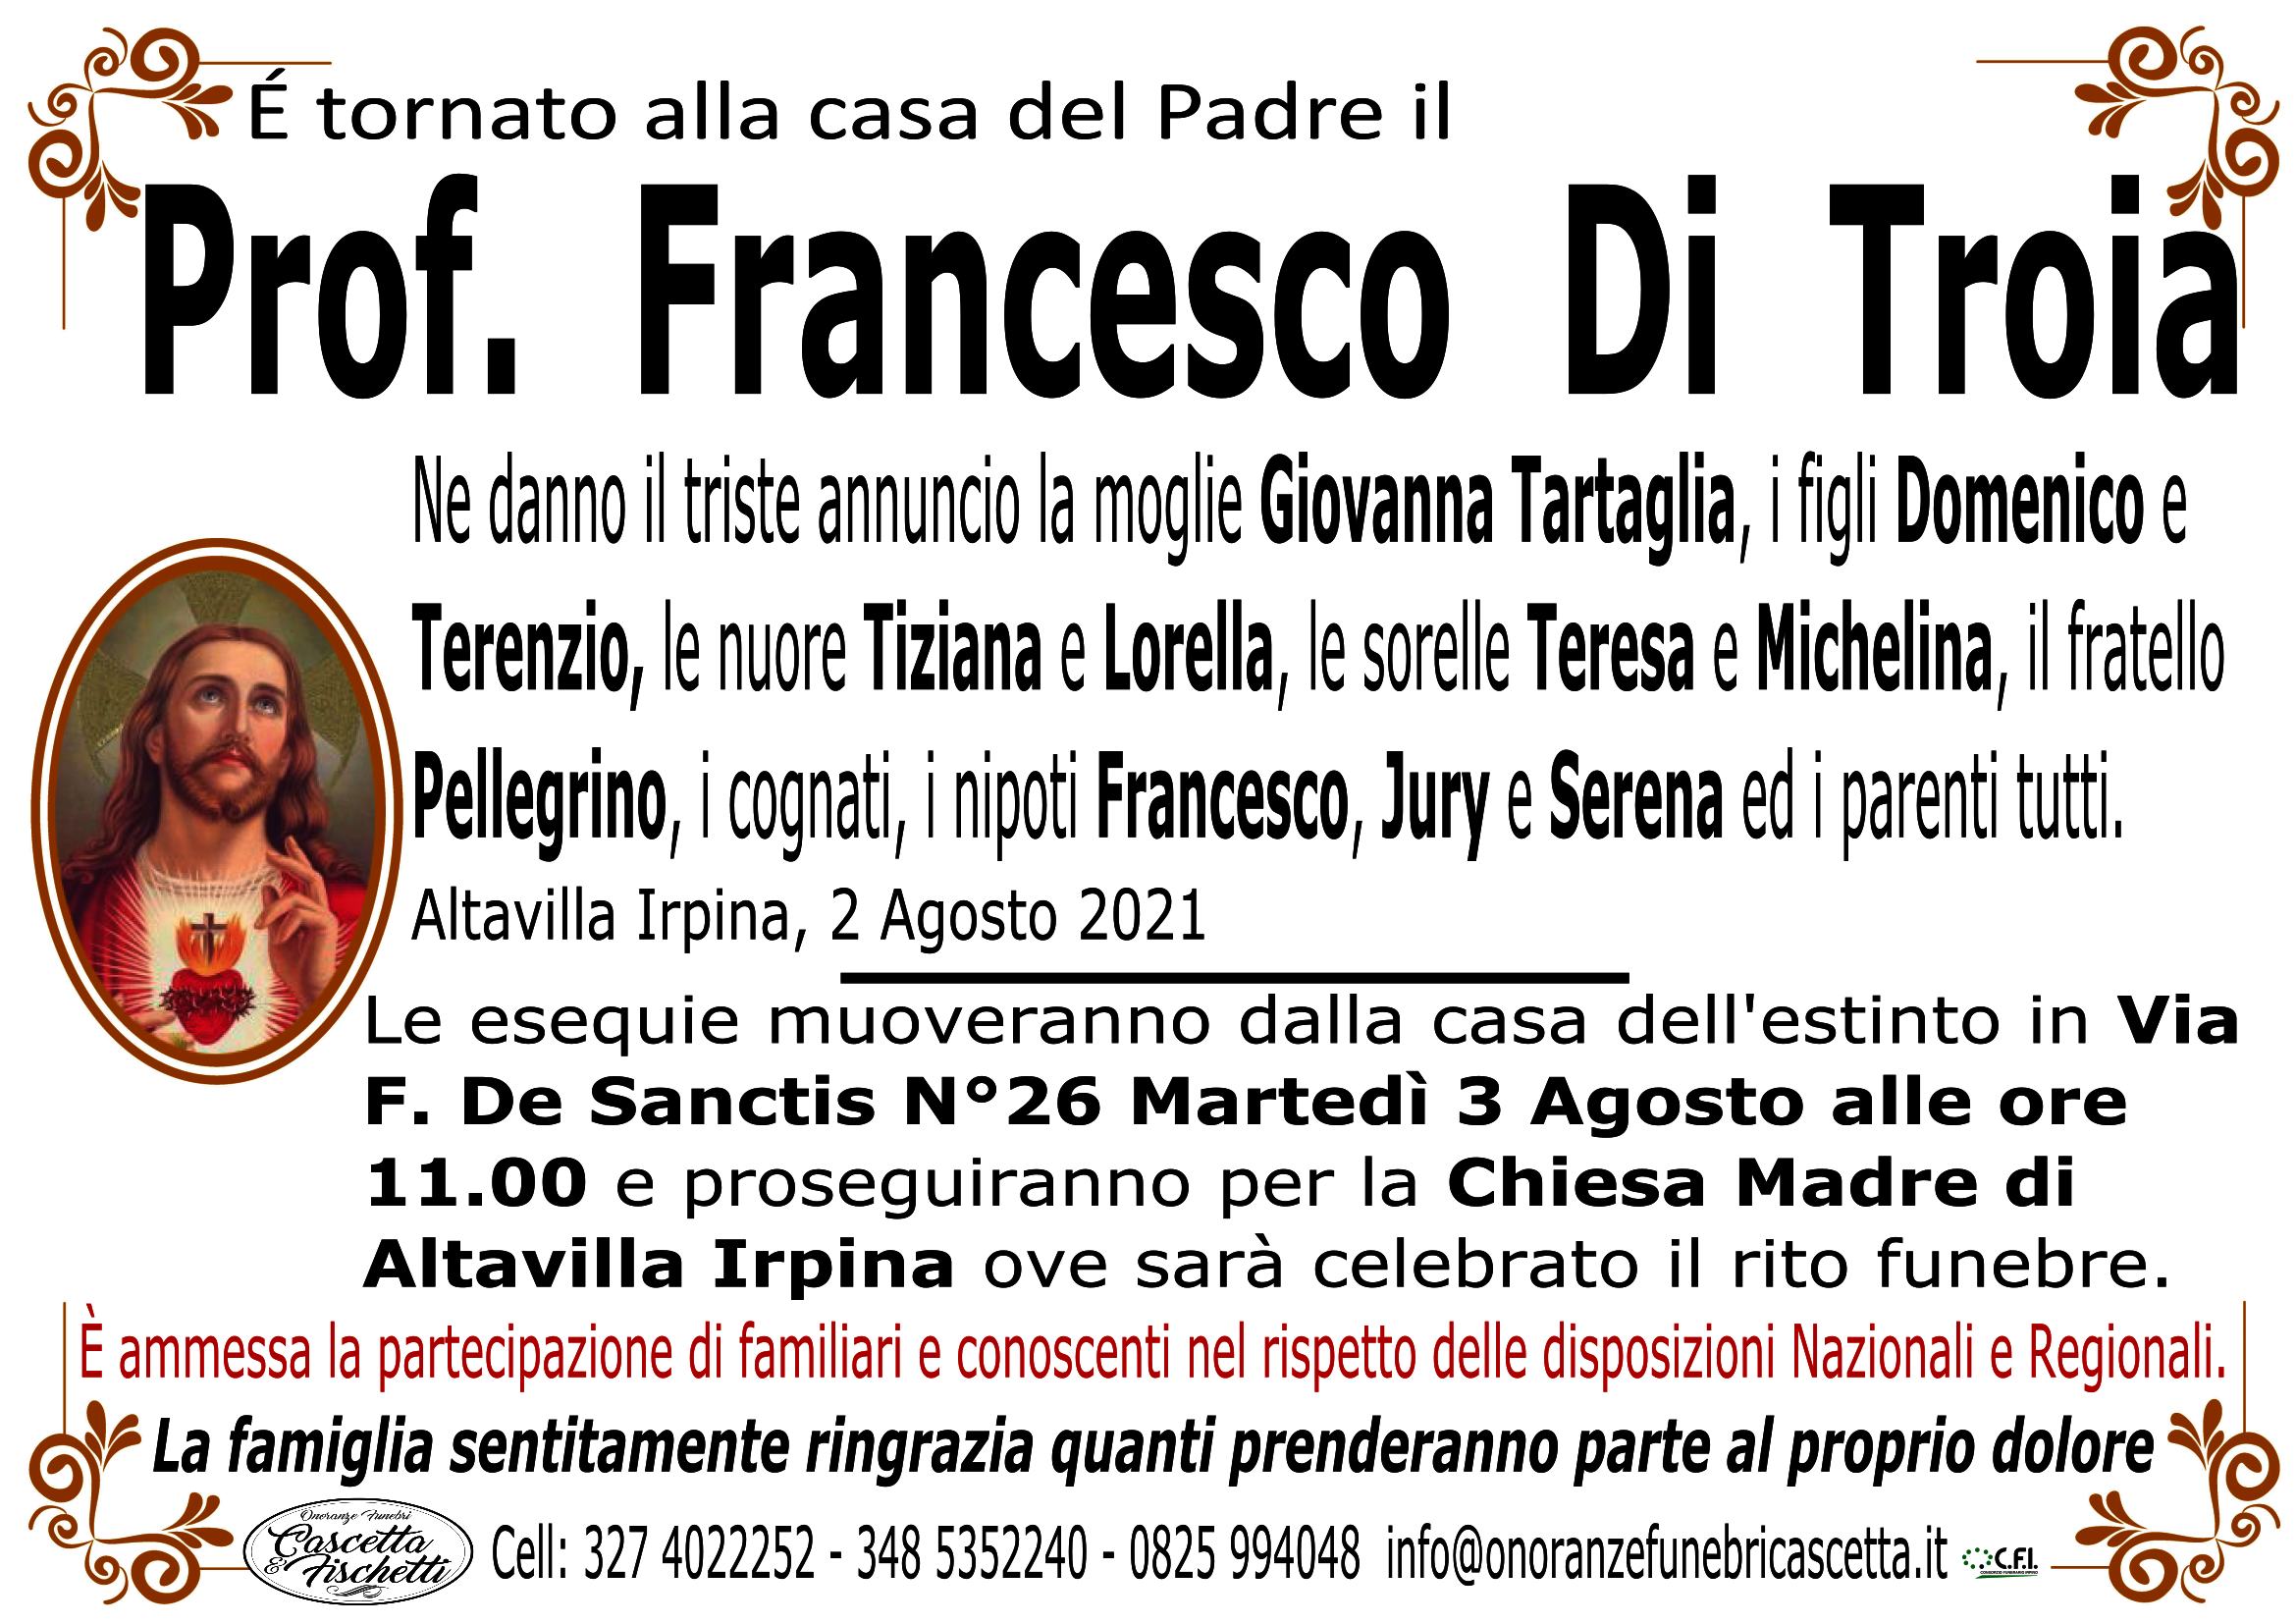 Prof. Francesco Di Troia